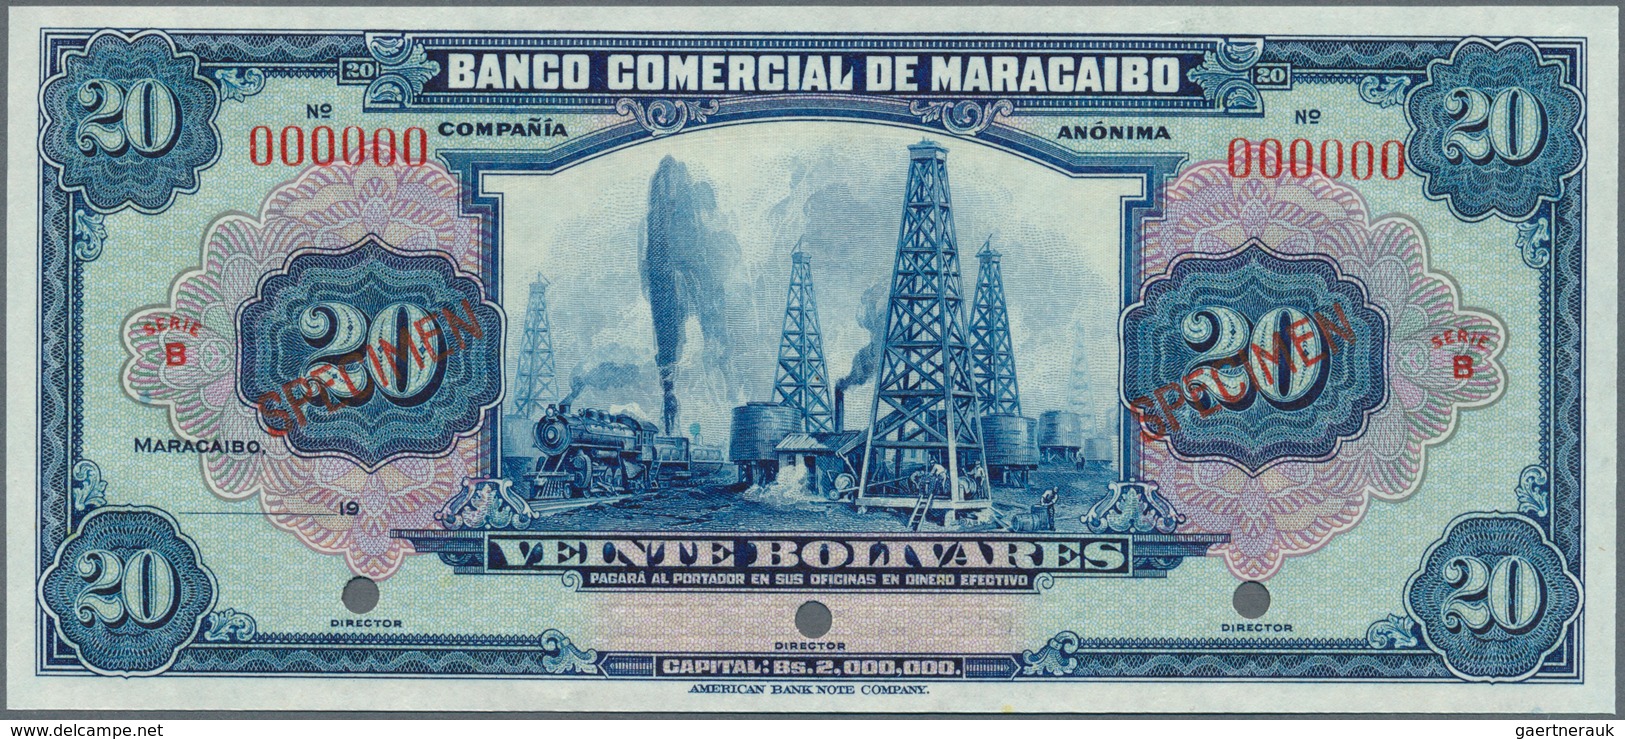 02607 Venezuela: Banco Comercial De Maracaibo 20 Bolivares Specimen Without Signatures And Date (1929), P. - Venezuela